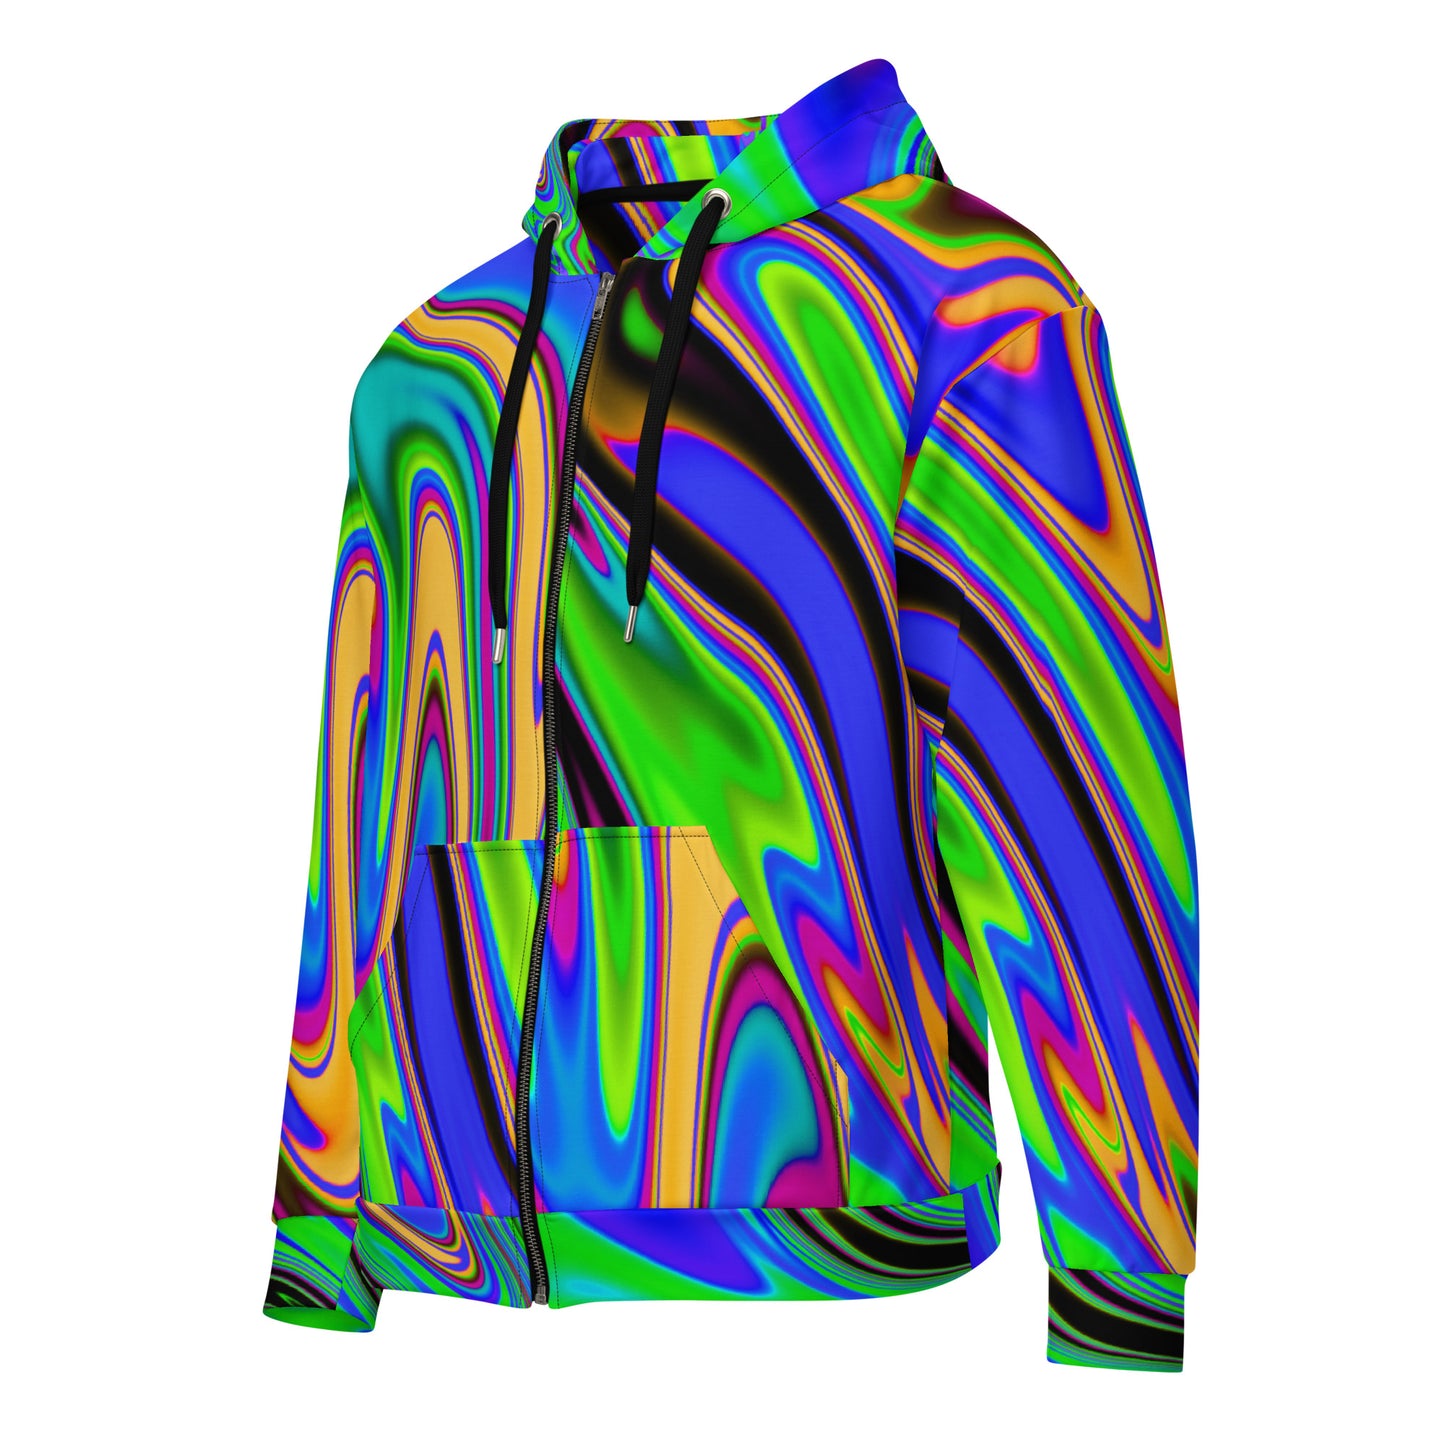 Chromatic Dreamz v2 Unisex zip hoodie